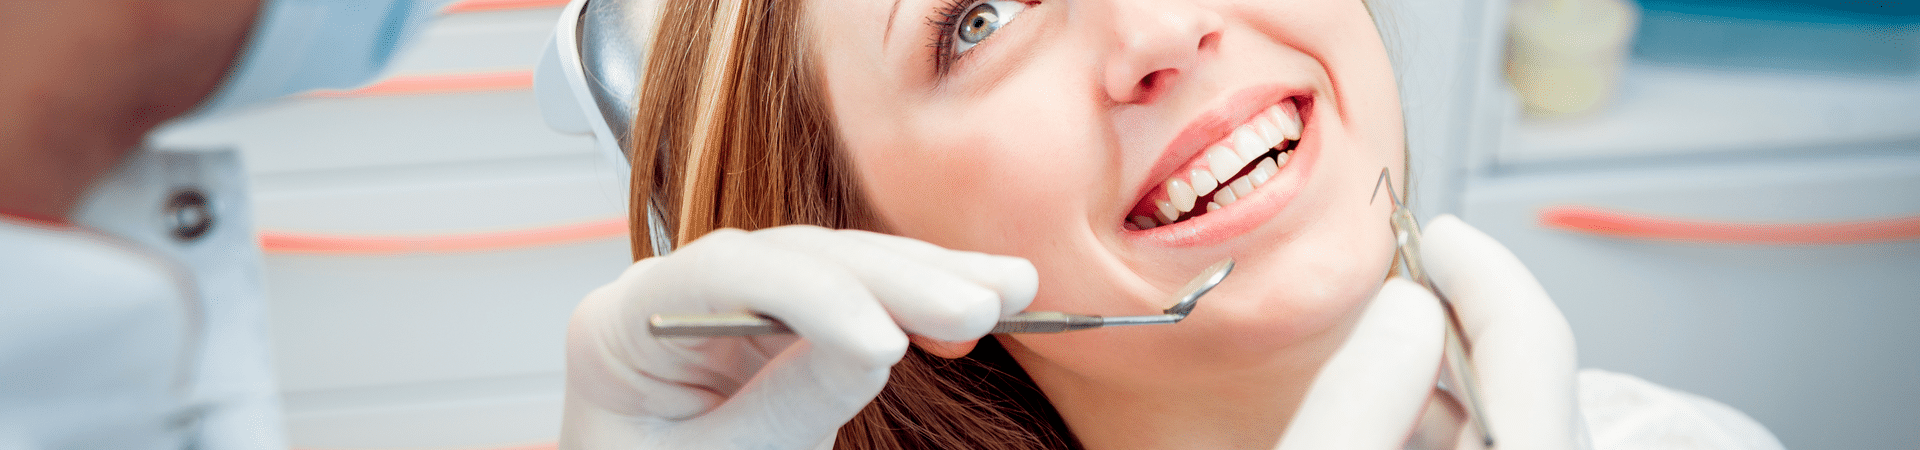 Dental Bonding and Restoration